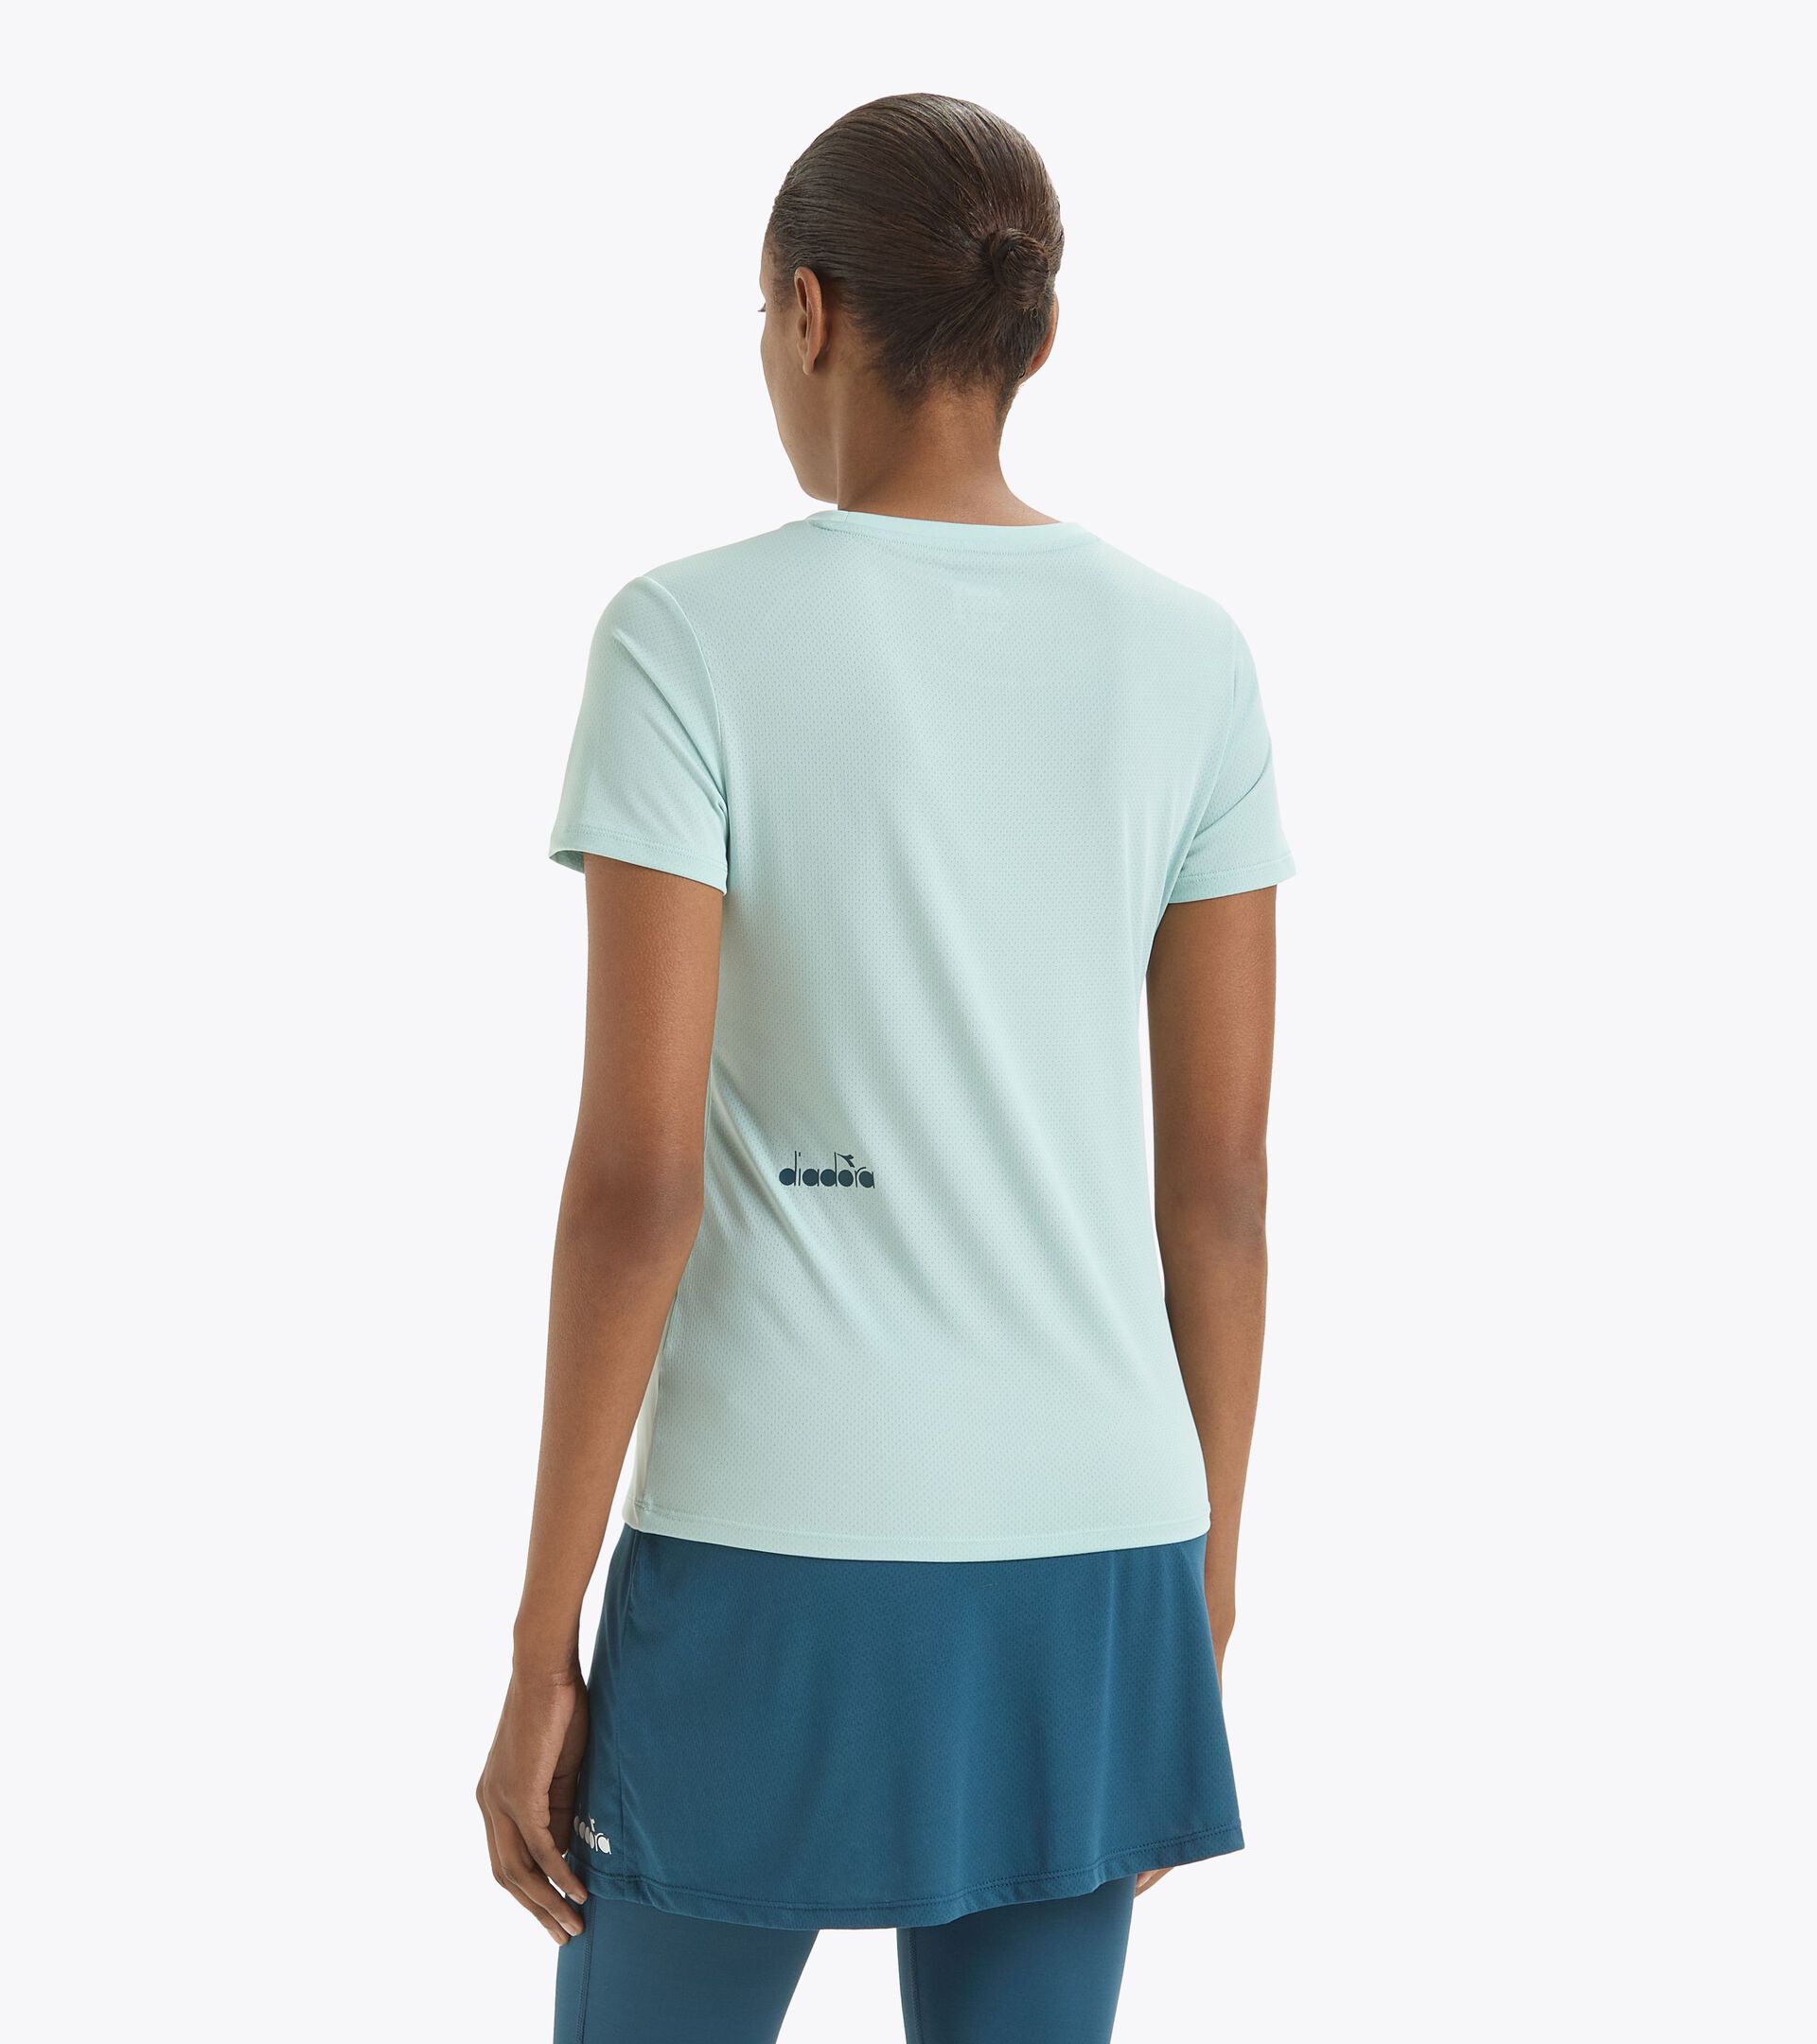 Camiseta de tenis - Mujer L. SS T-SHIRT TENNIS OLAS SPRAY - Diadora